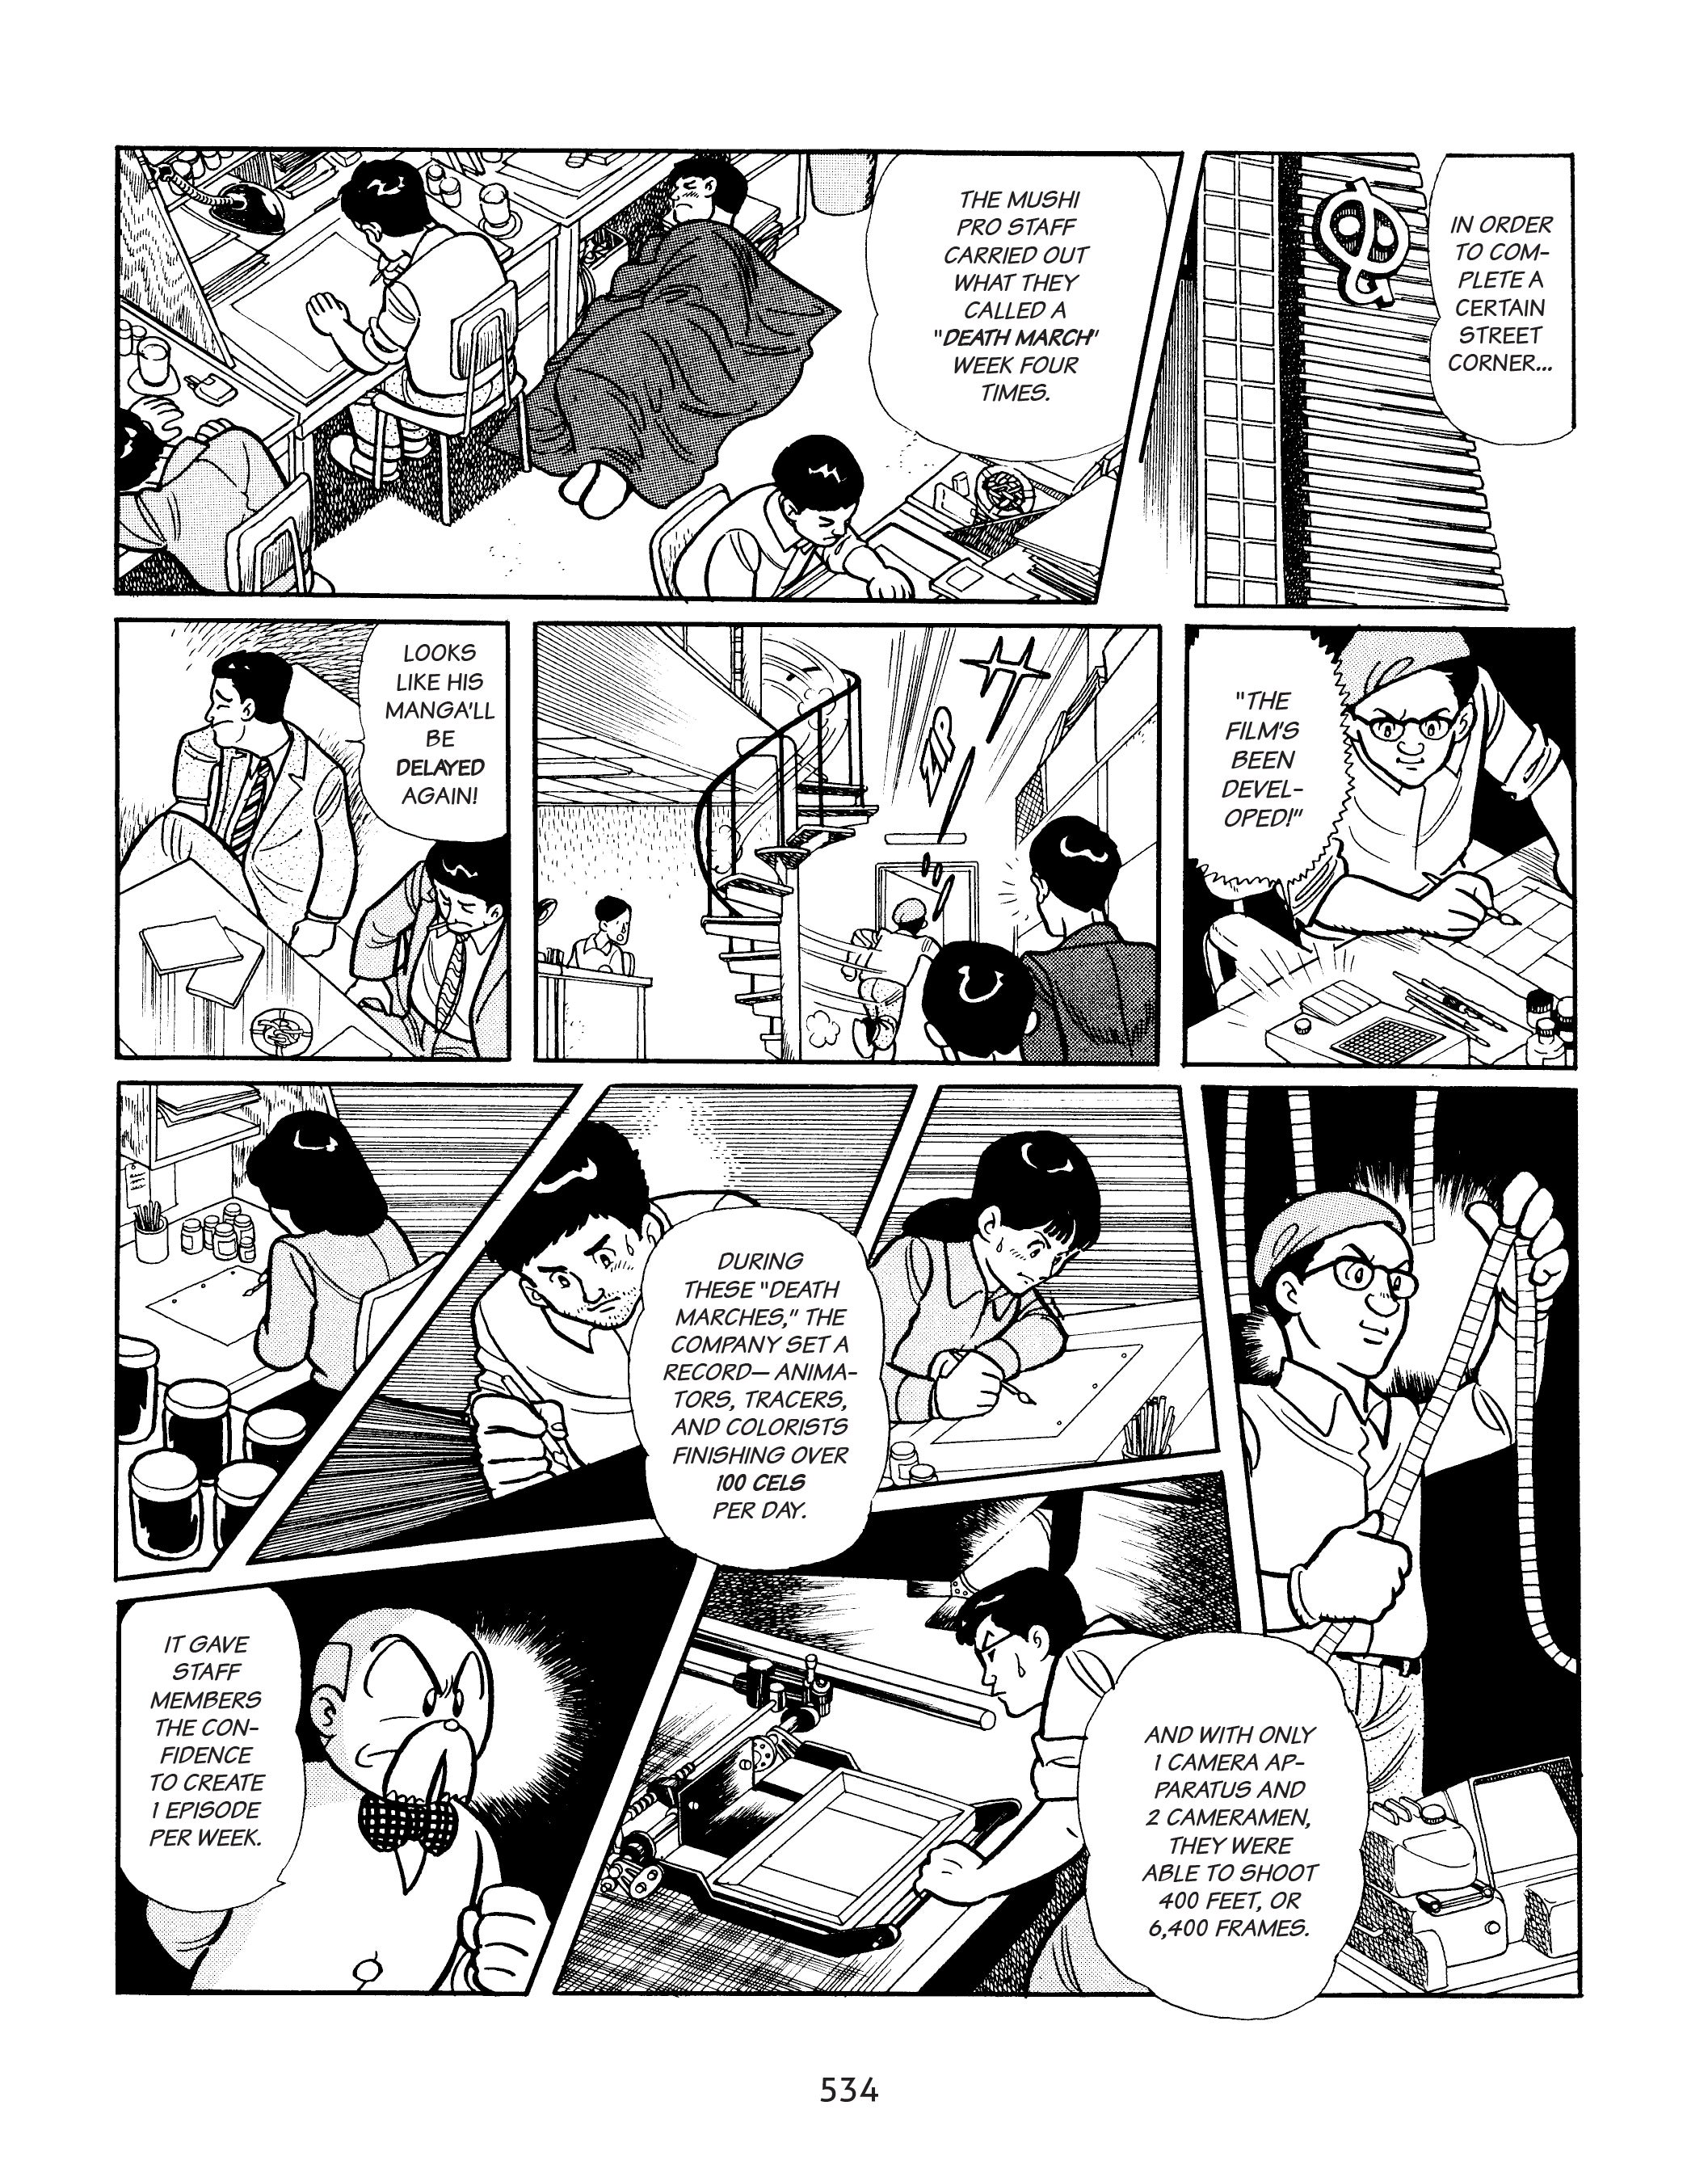 the osamu tezuka story a life in manga and anime pdf